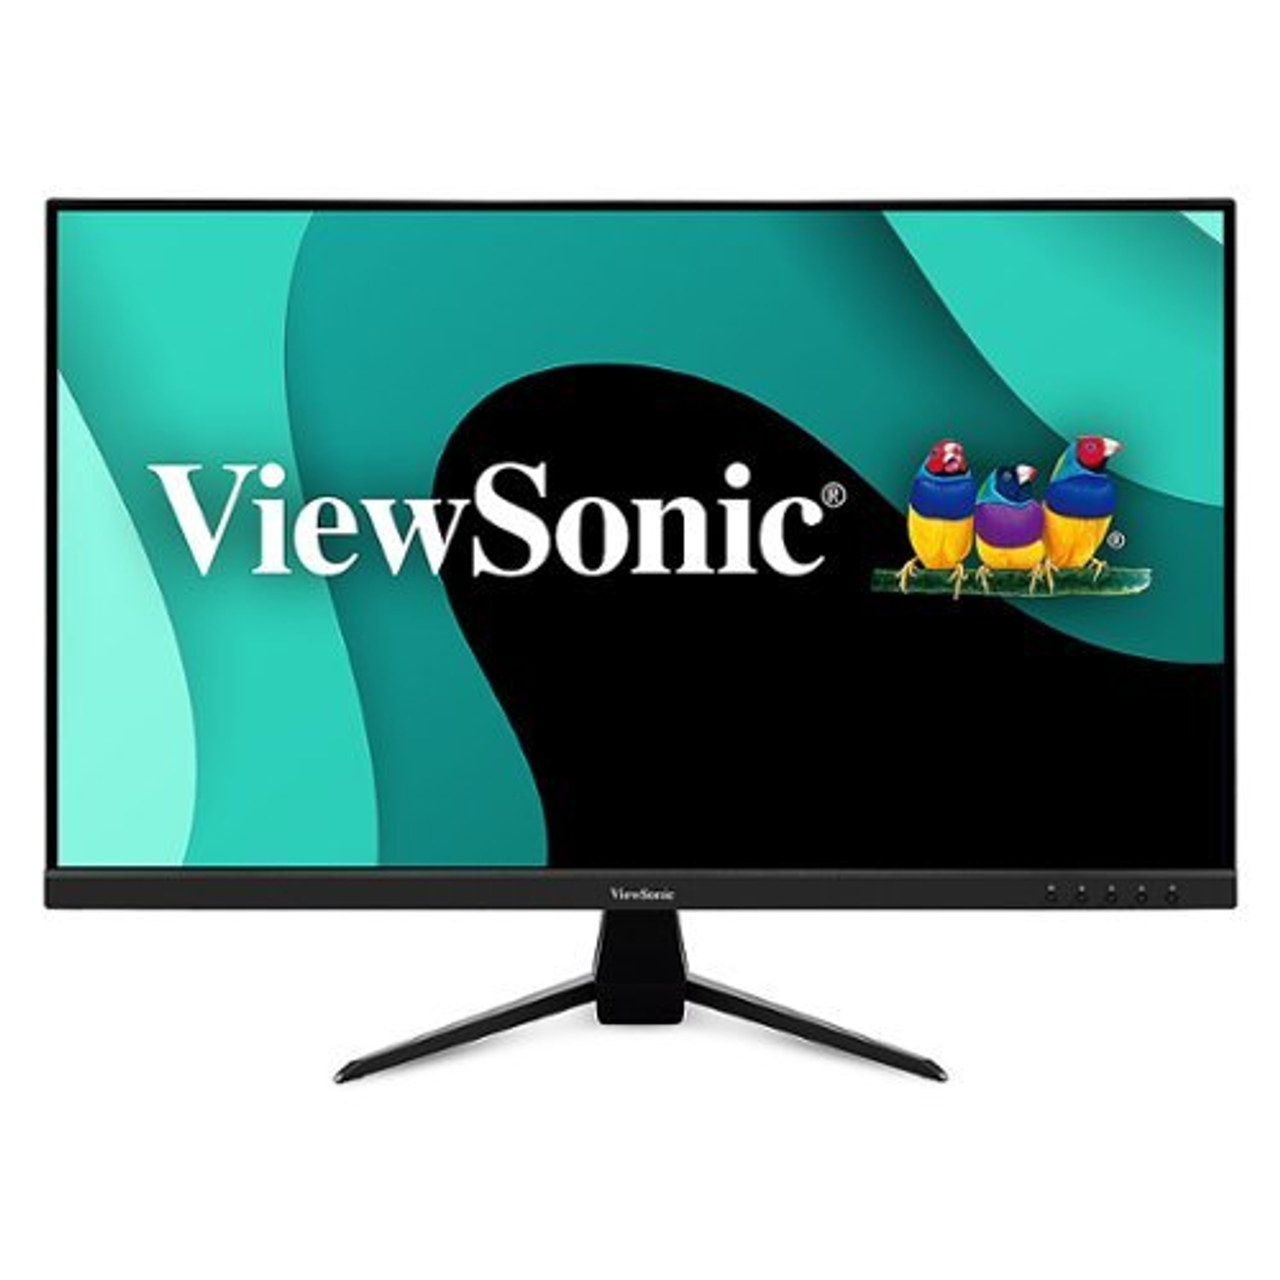 ViewSonic - VX3267U-4K 32" IPS UHD Monitor (Display Port, HDMI) - Black